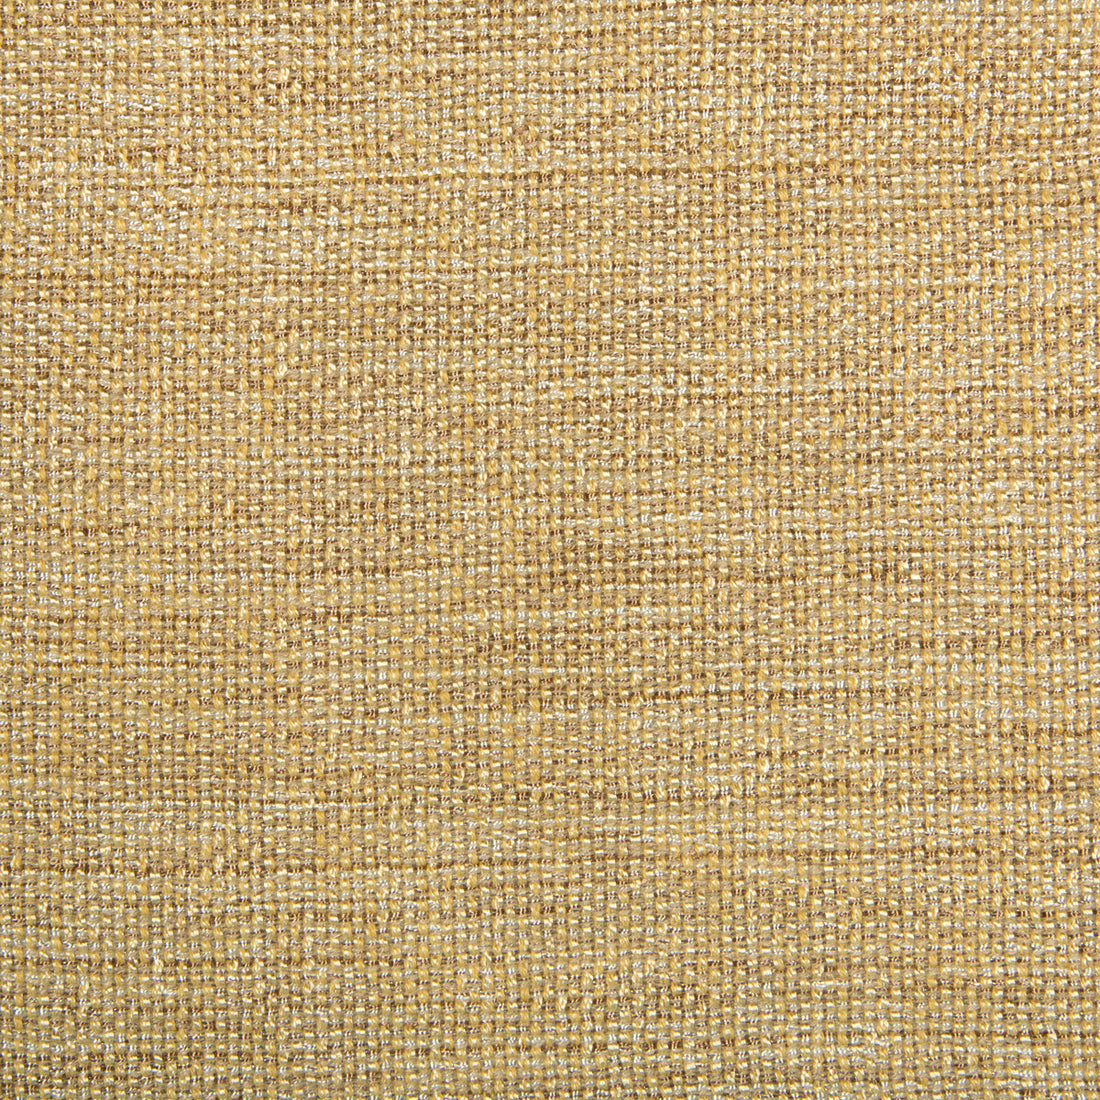 Kravet Smart fabric in 34939-414 color - pattern 34939.414.0 - by Kravet Smart